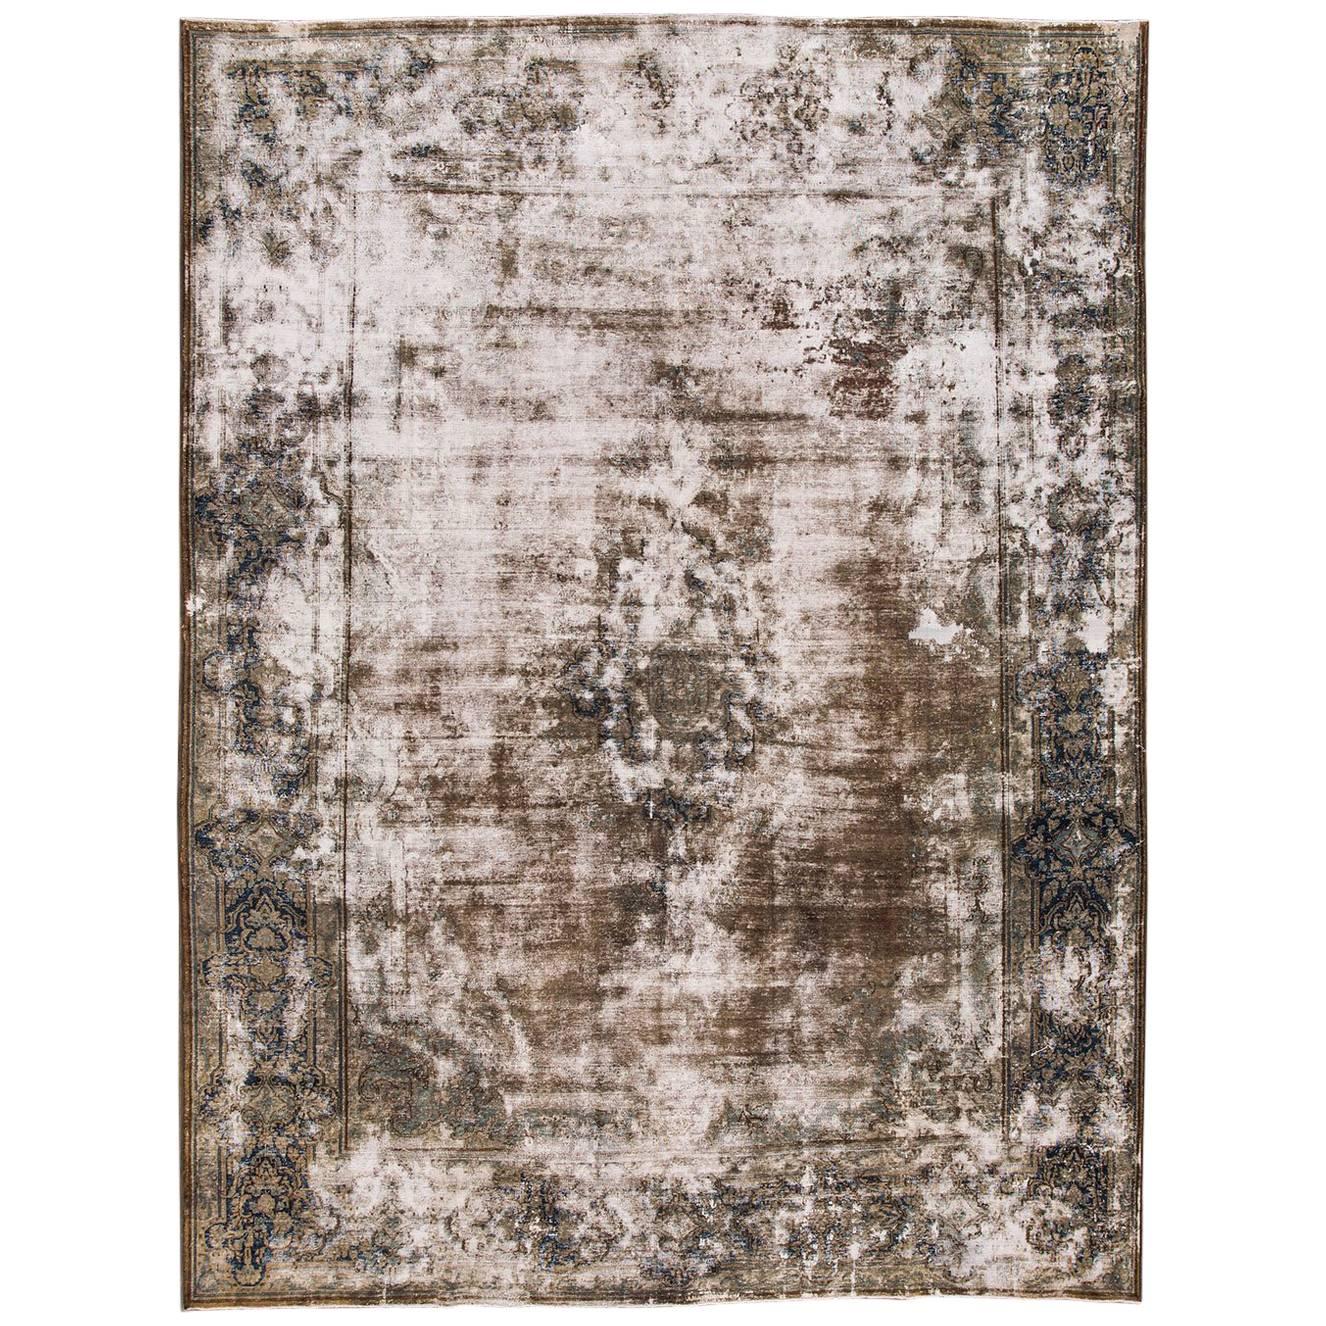 Antique Distressed Gray Persian Kerman Rug, 10x13.03